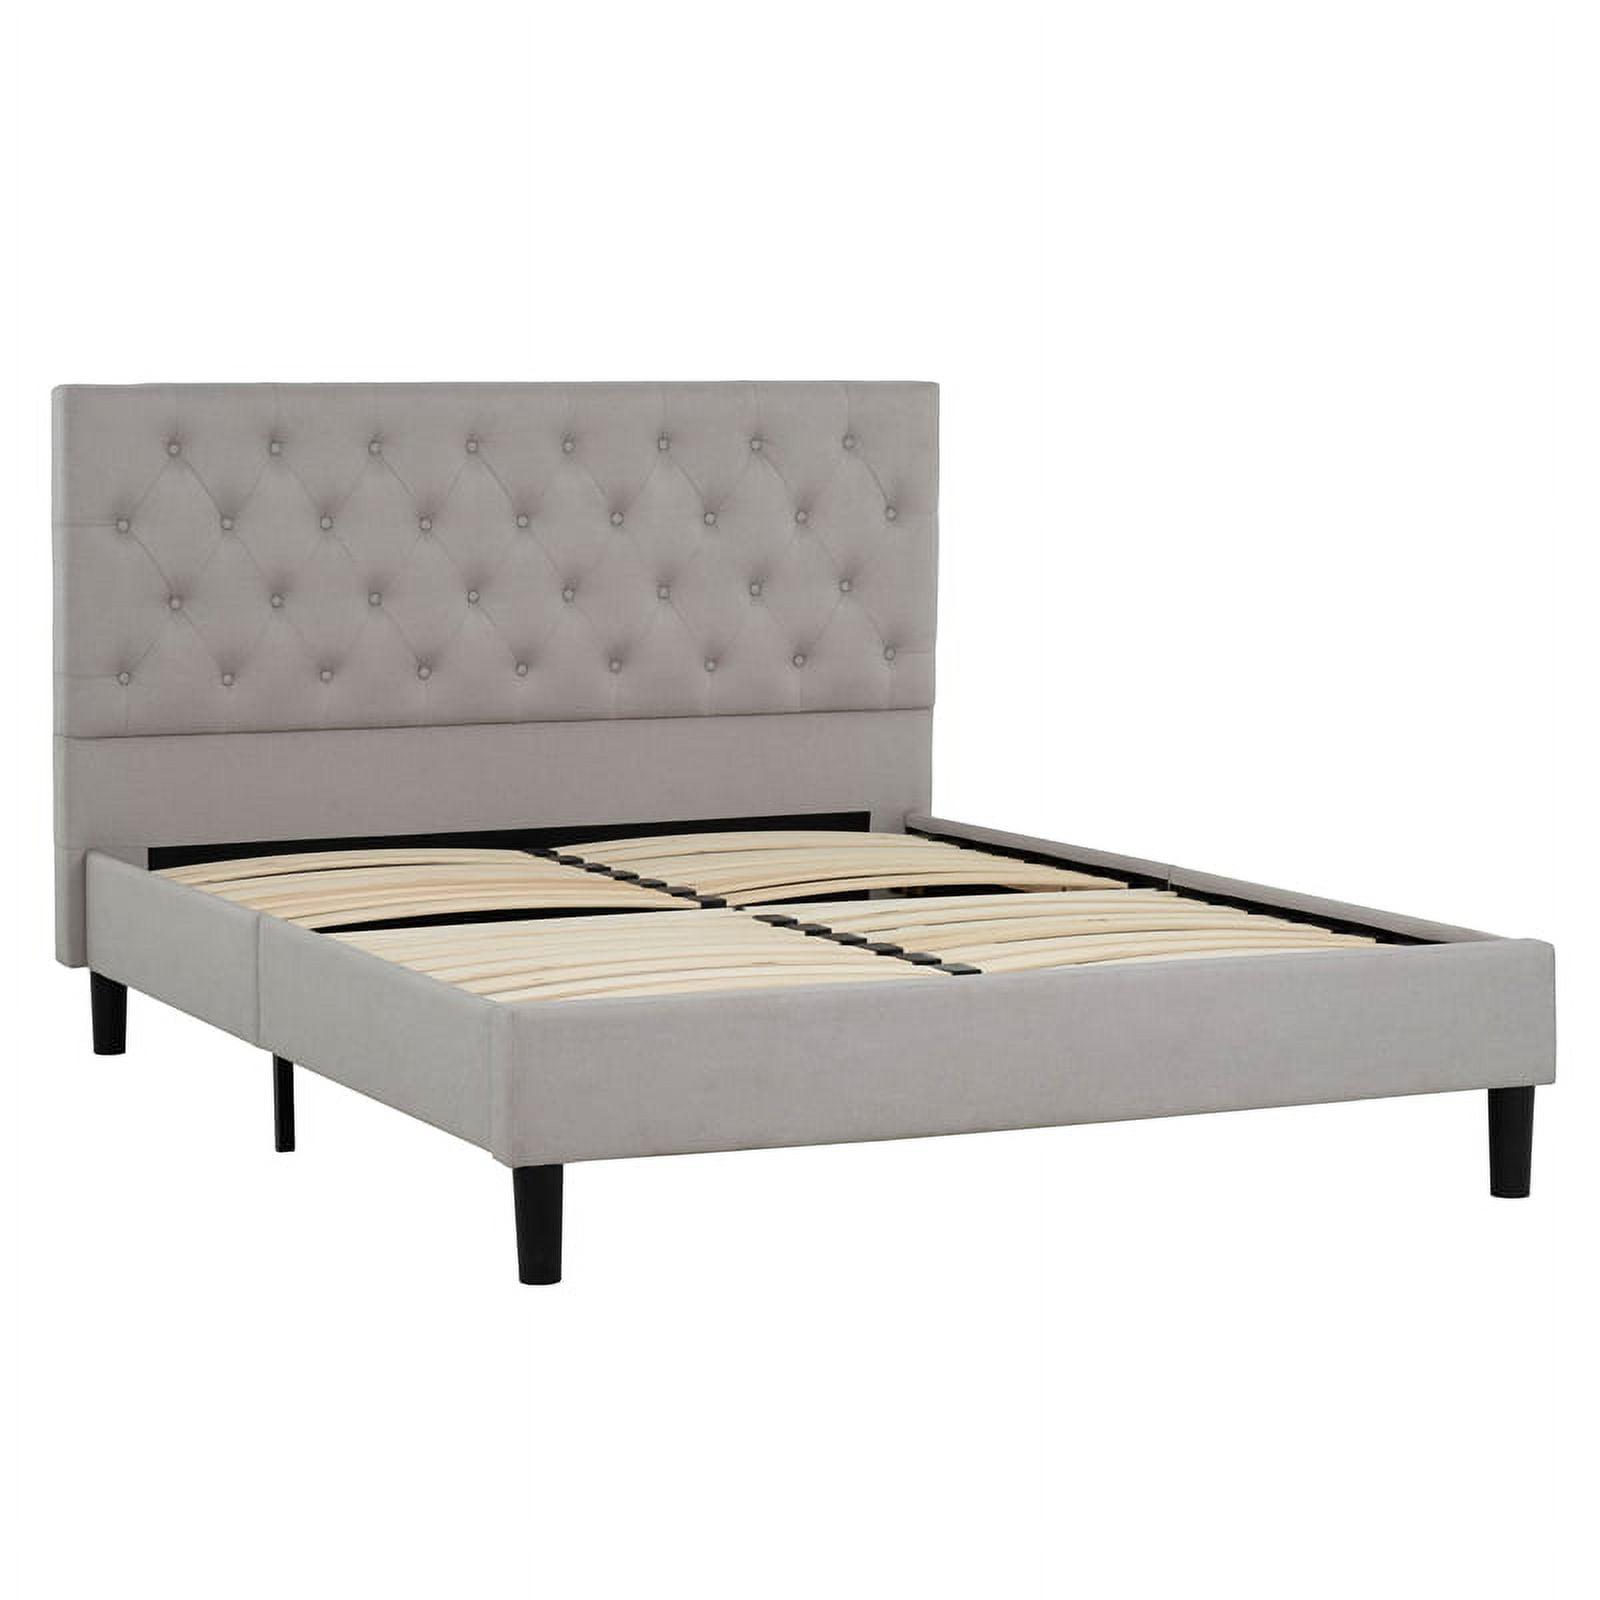 Ellie Queen-Size Gray Linen Tufted Upholstered Bed Frame